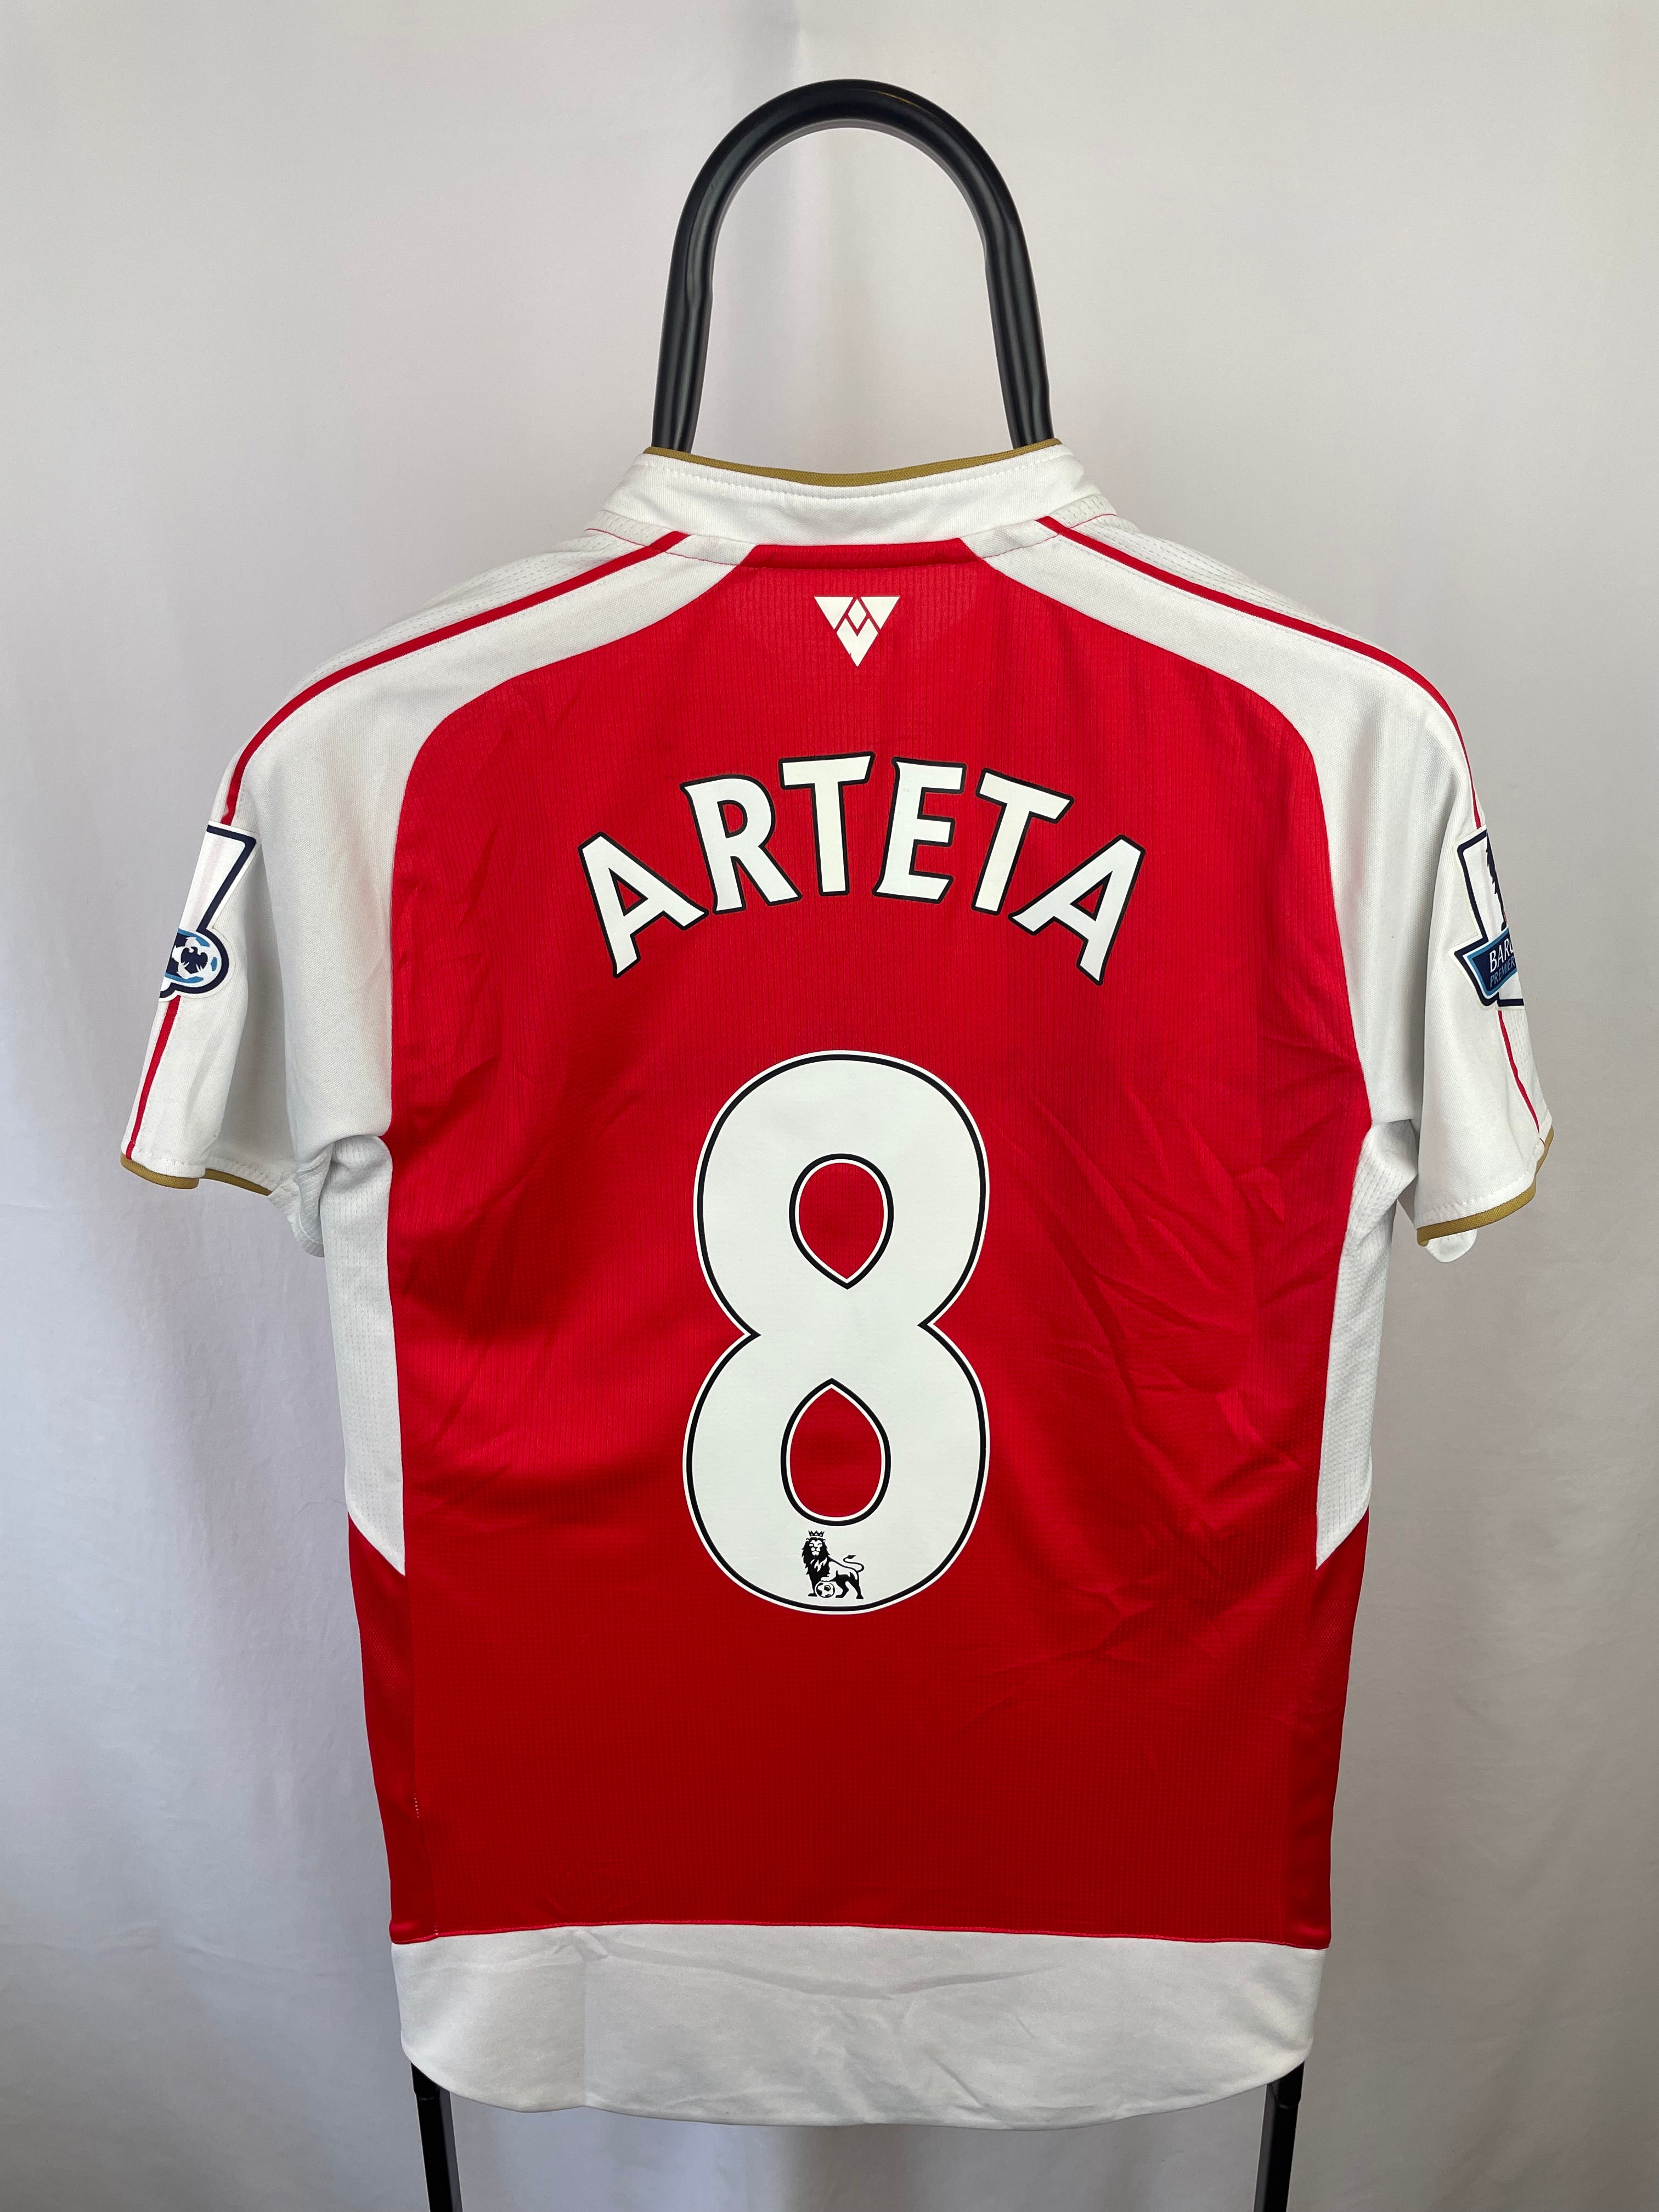 Mikel Arteta Arsenal 15/16 hjemmebanetrøje - S